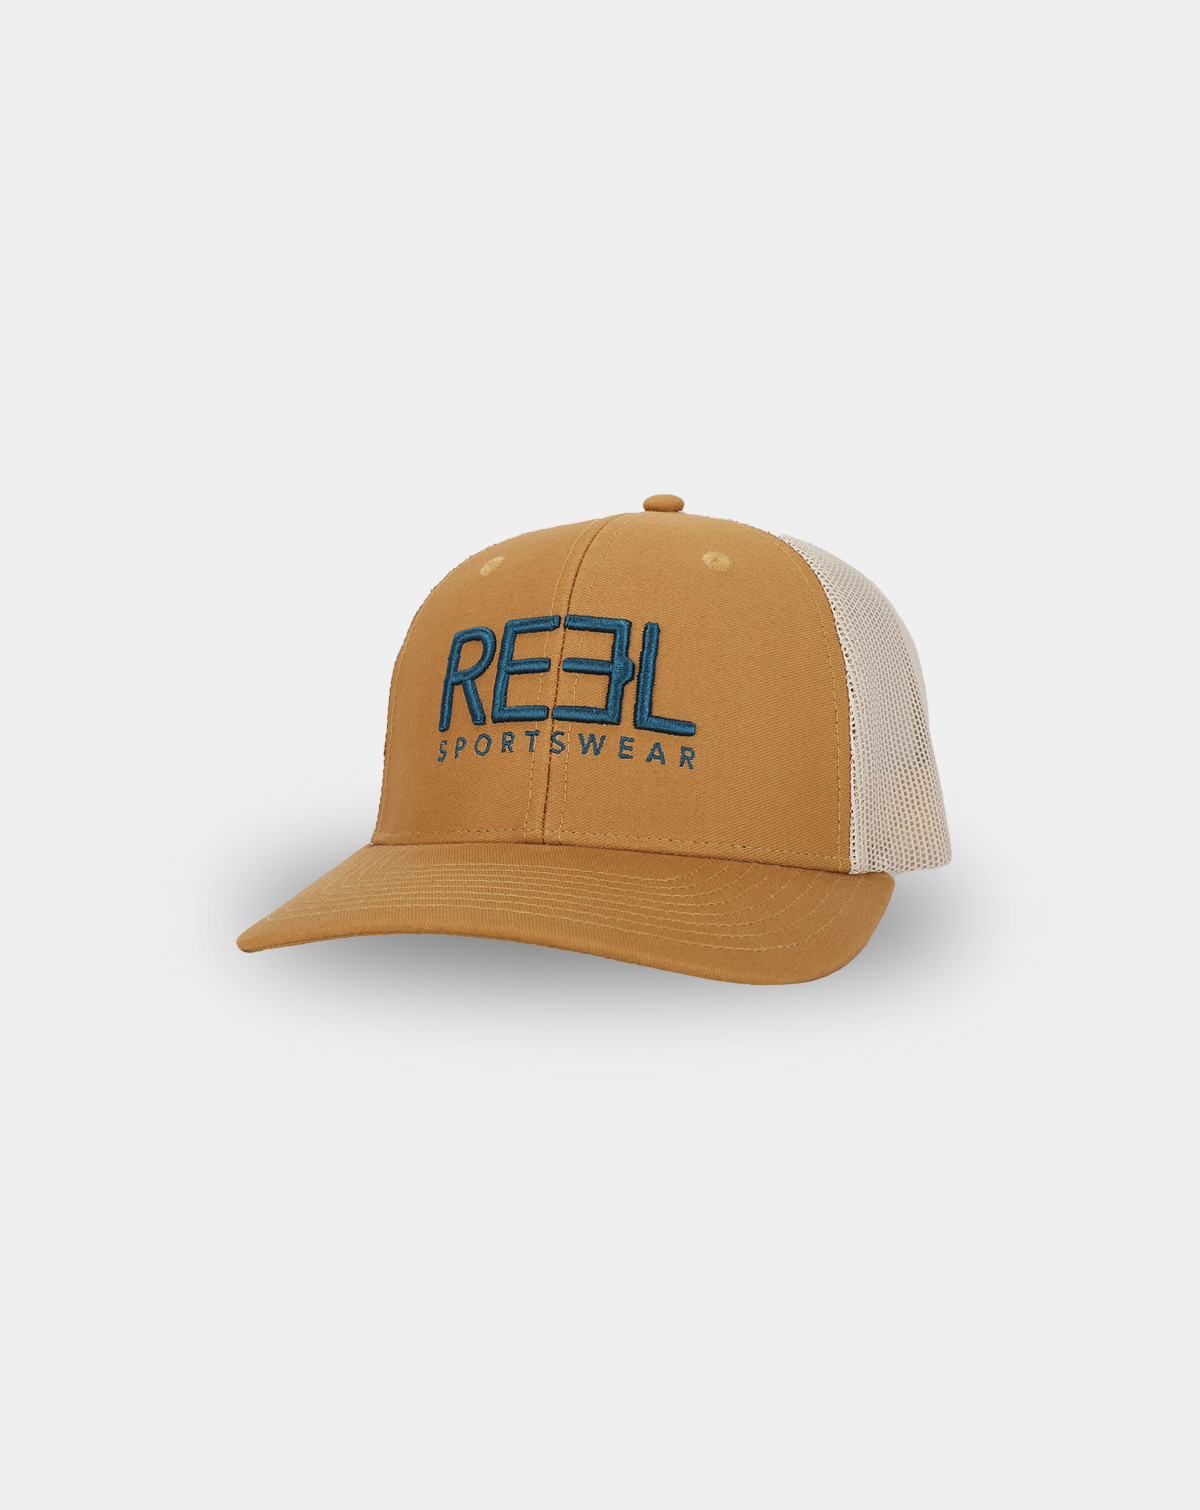 Penn Fishing Gear Reel Rod Baseball Cap Trucker Hats Breathable Sunscreen  Hot Deals Best Quality Retro